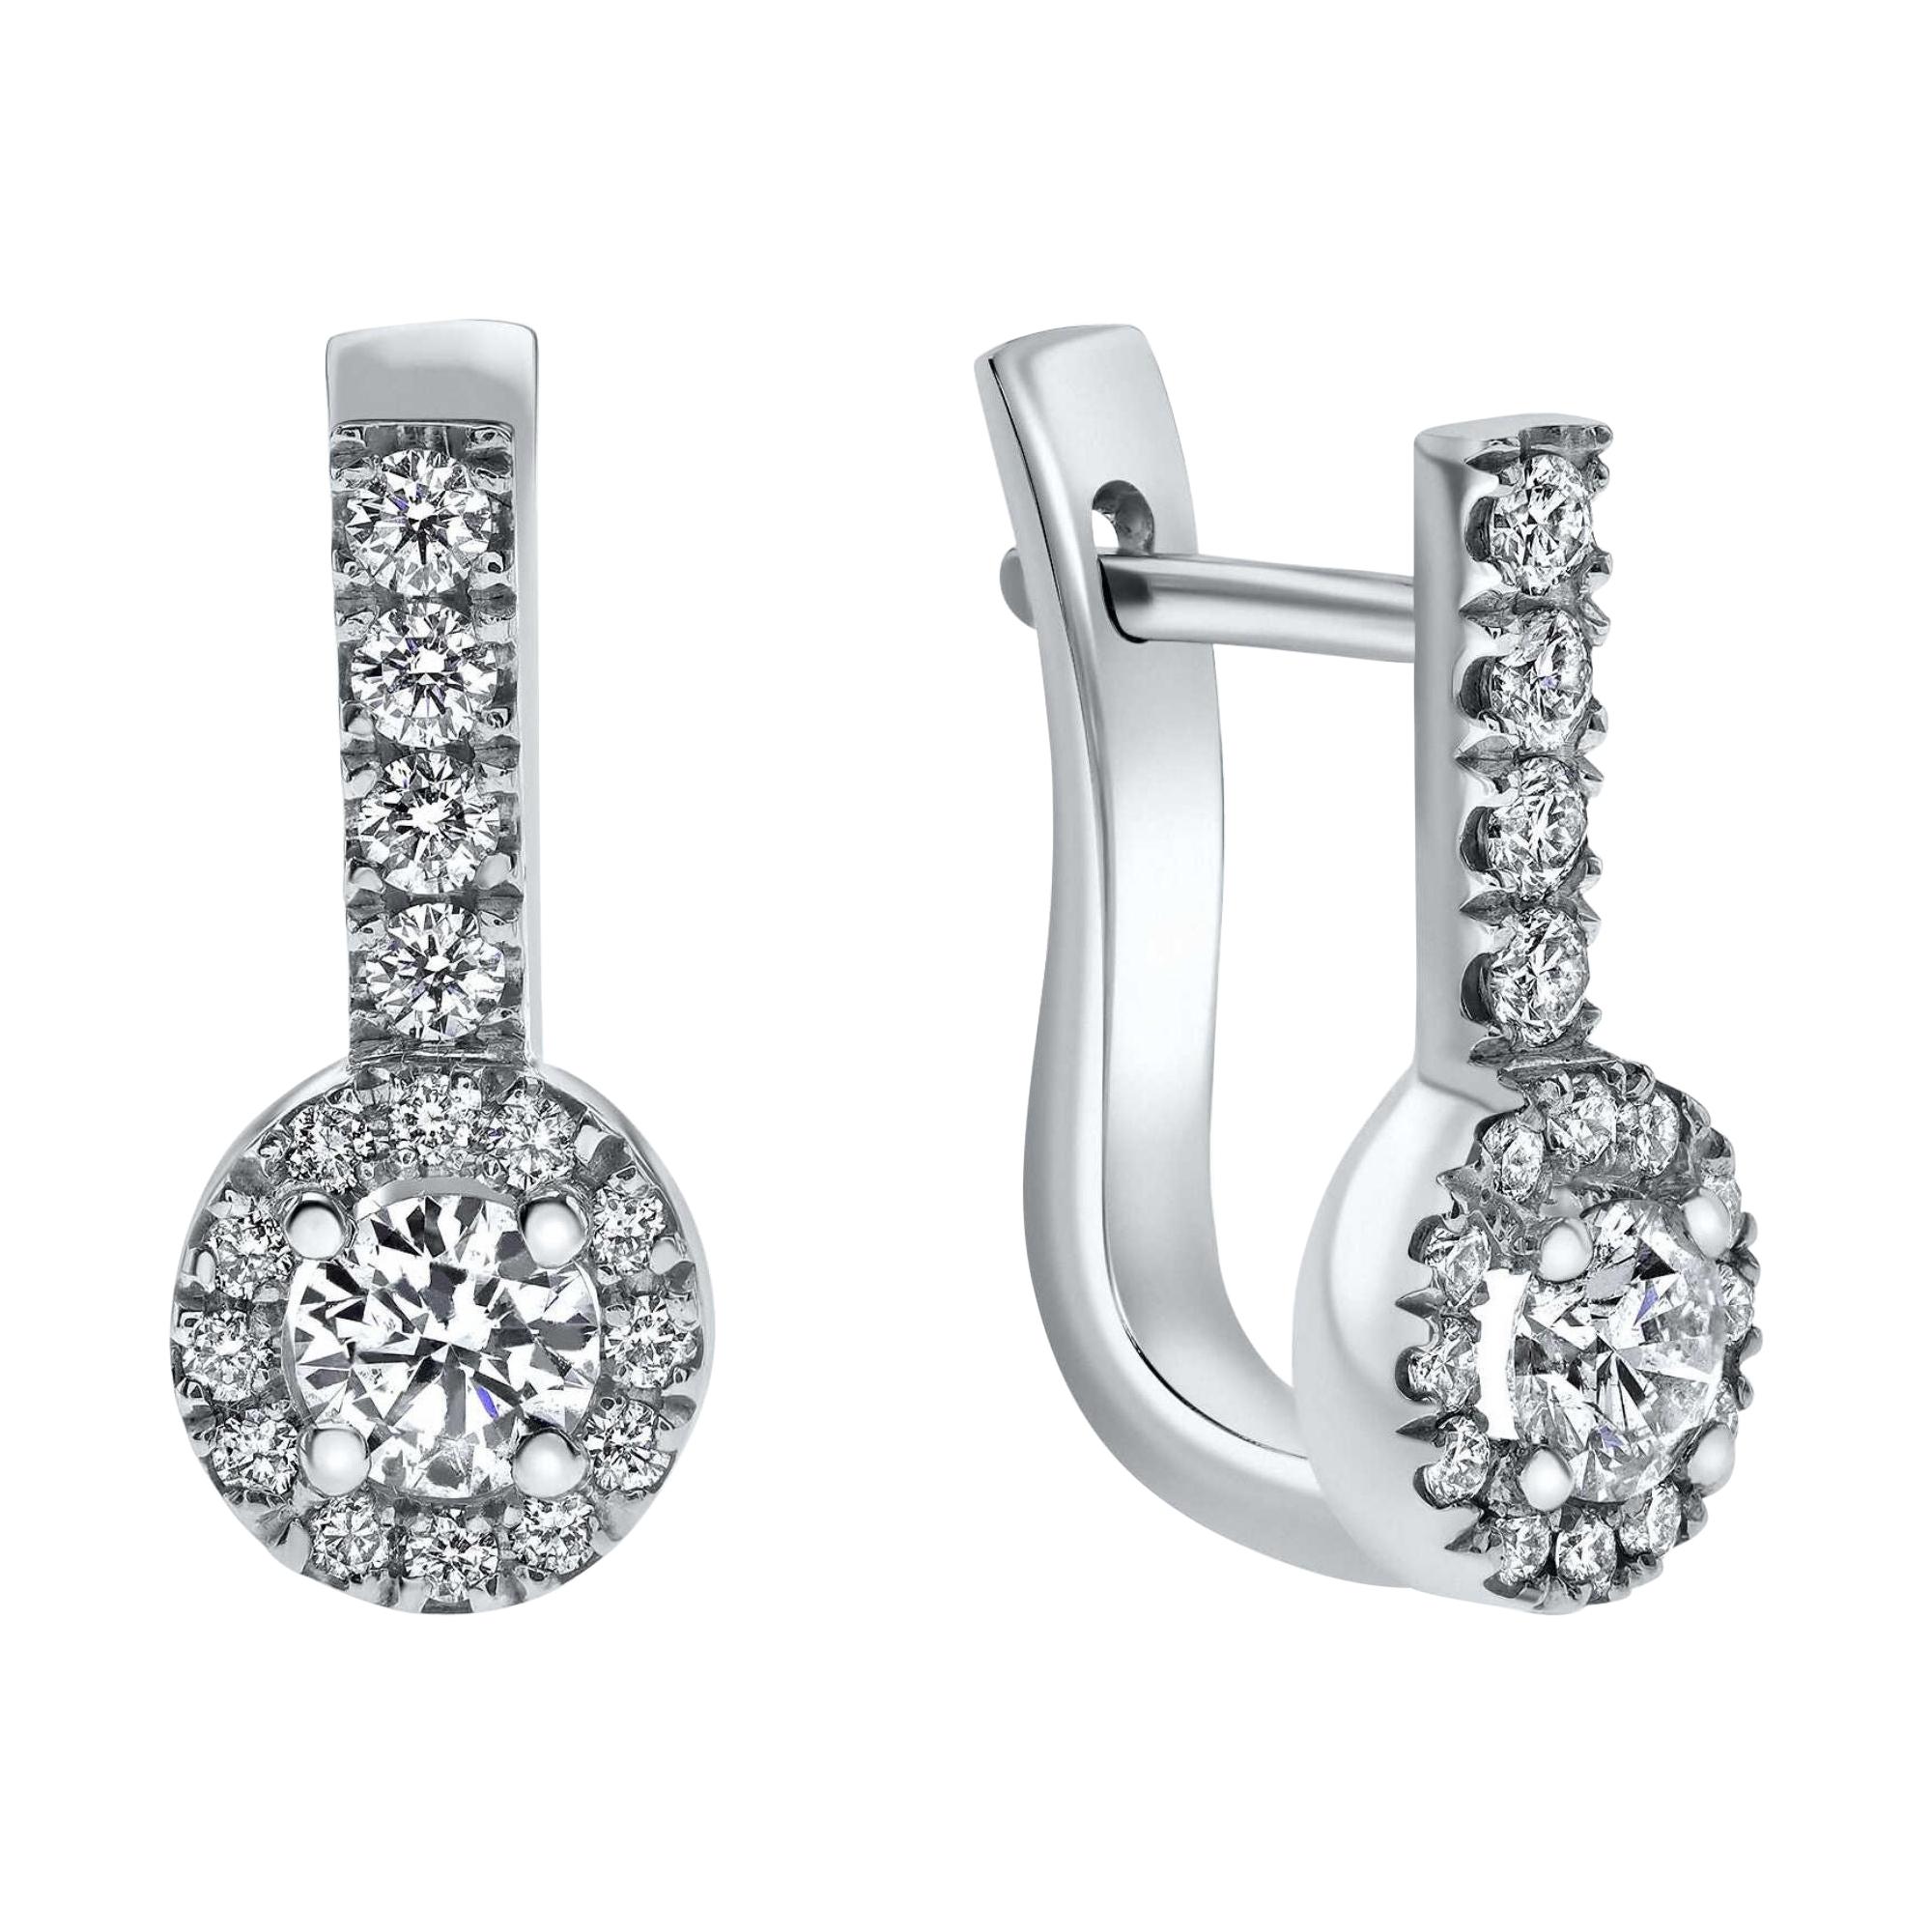 1.10 Carat "Edison" Diamond Earrings in 14K White Gold, Shlomit Rogel